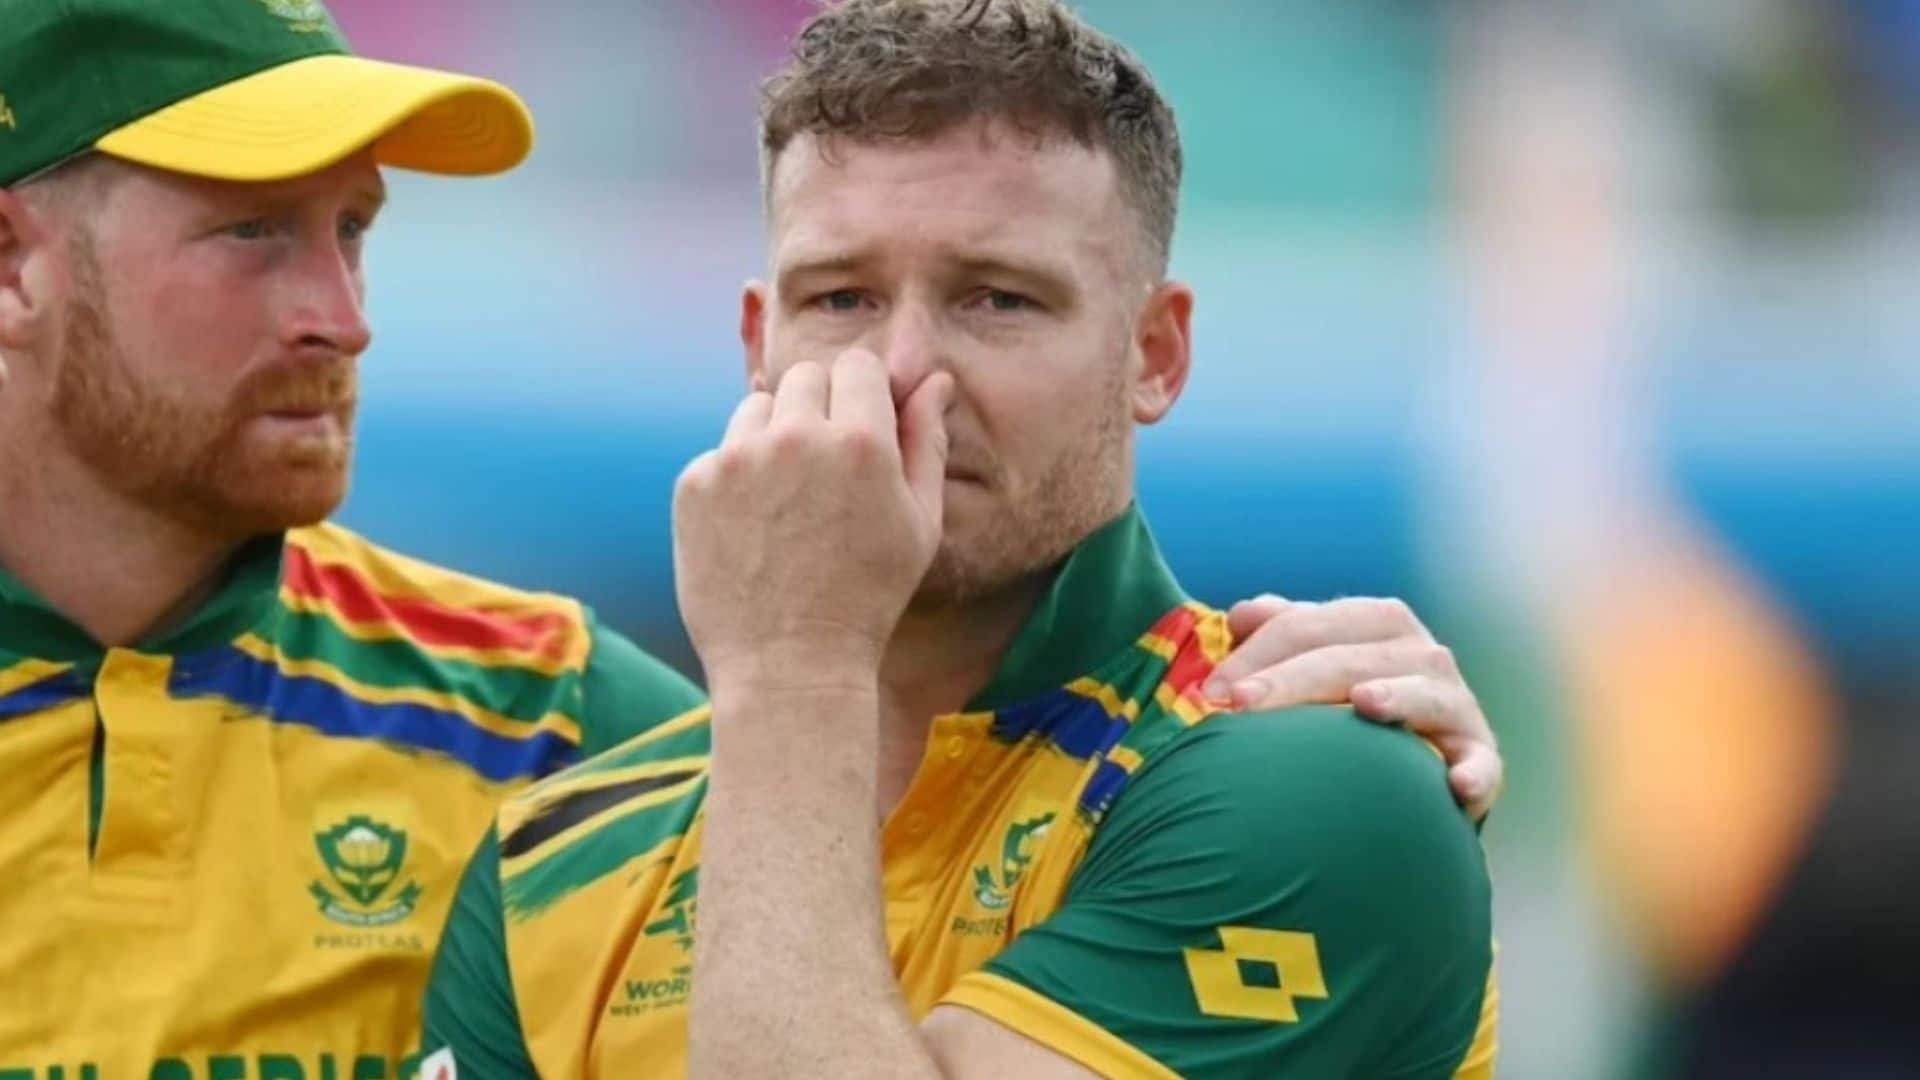 David Miller broke down after South Africa's defeat (x.com)